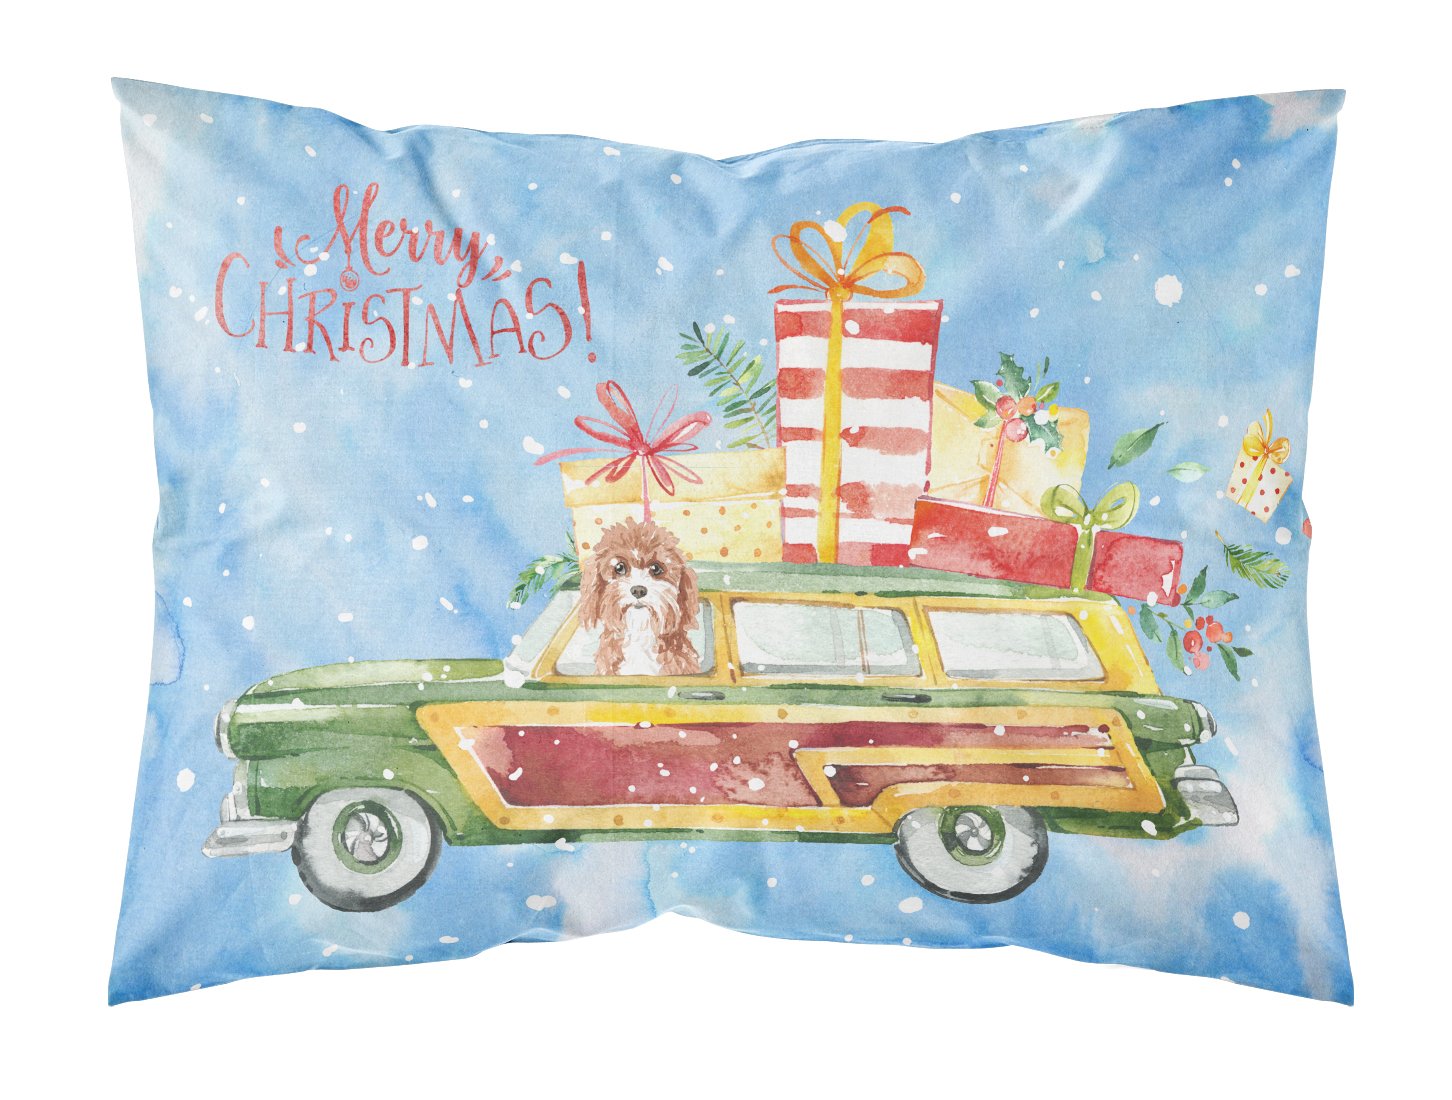 Merry Christmas Cavapoo Fabric Standard Pillowcase CK2403PILLOWCASE by Caroline's Treasures